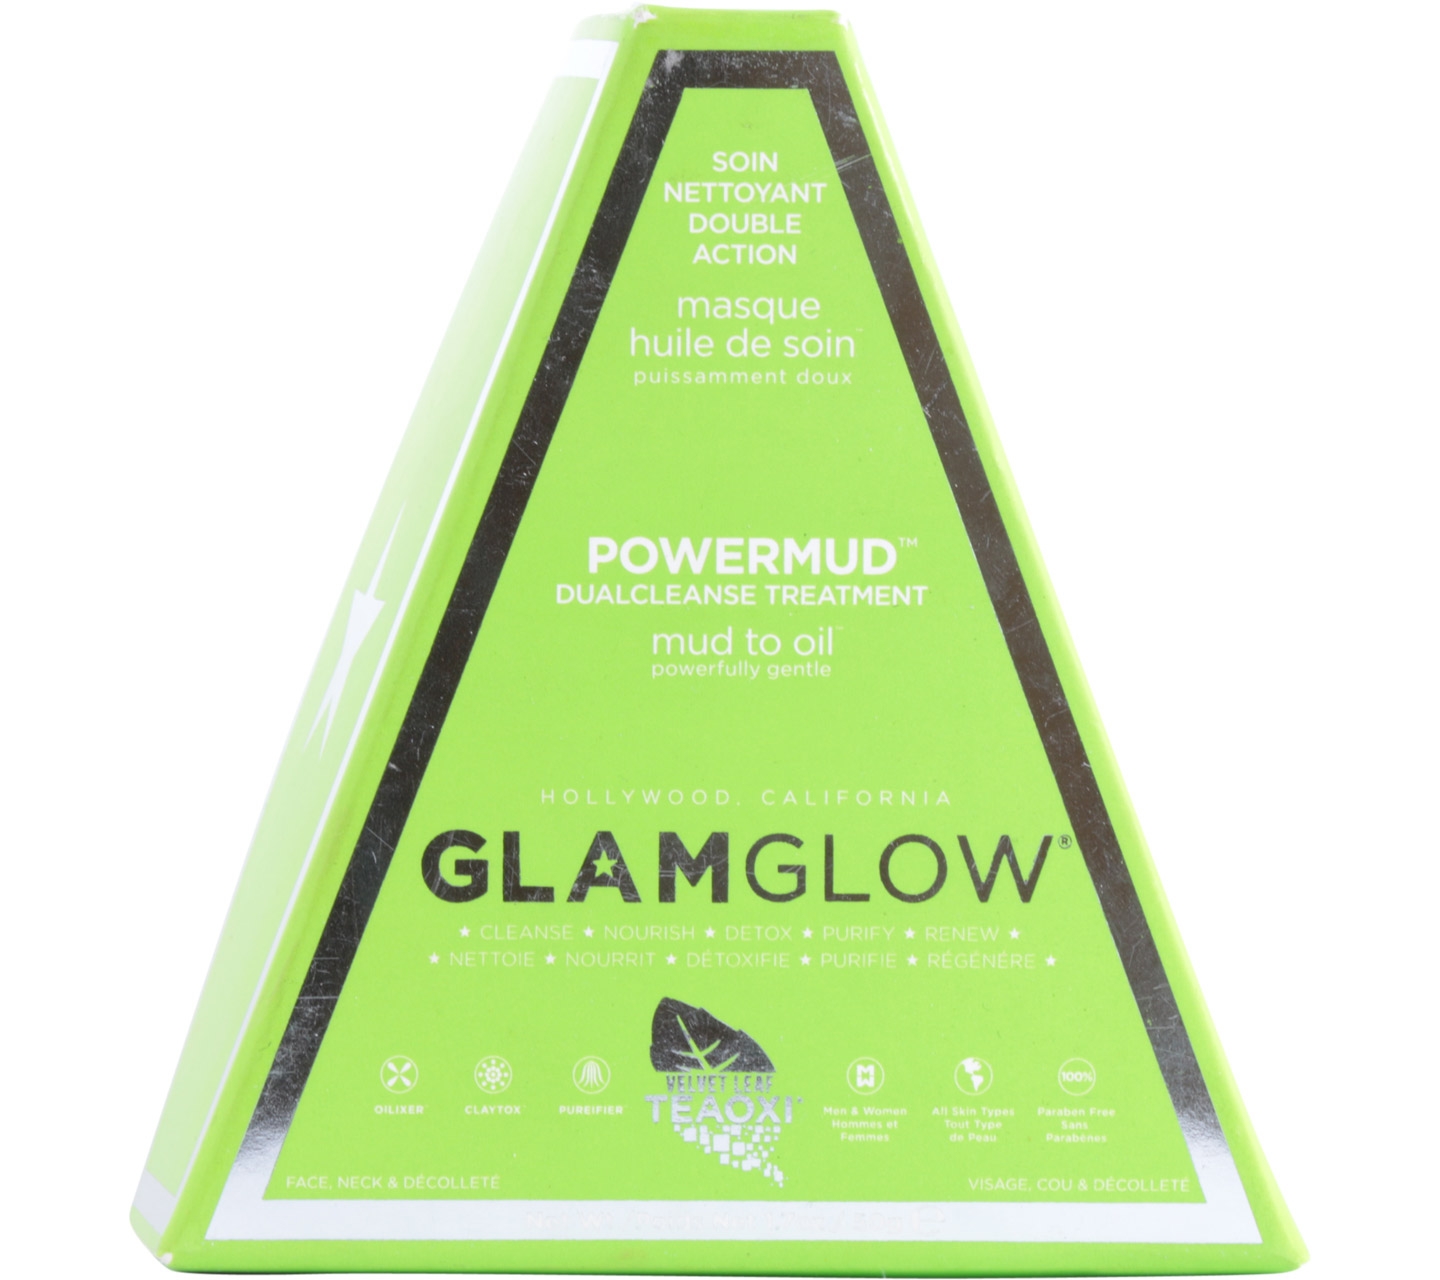 Glamglow Powermud Skin Care